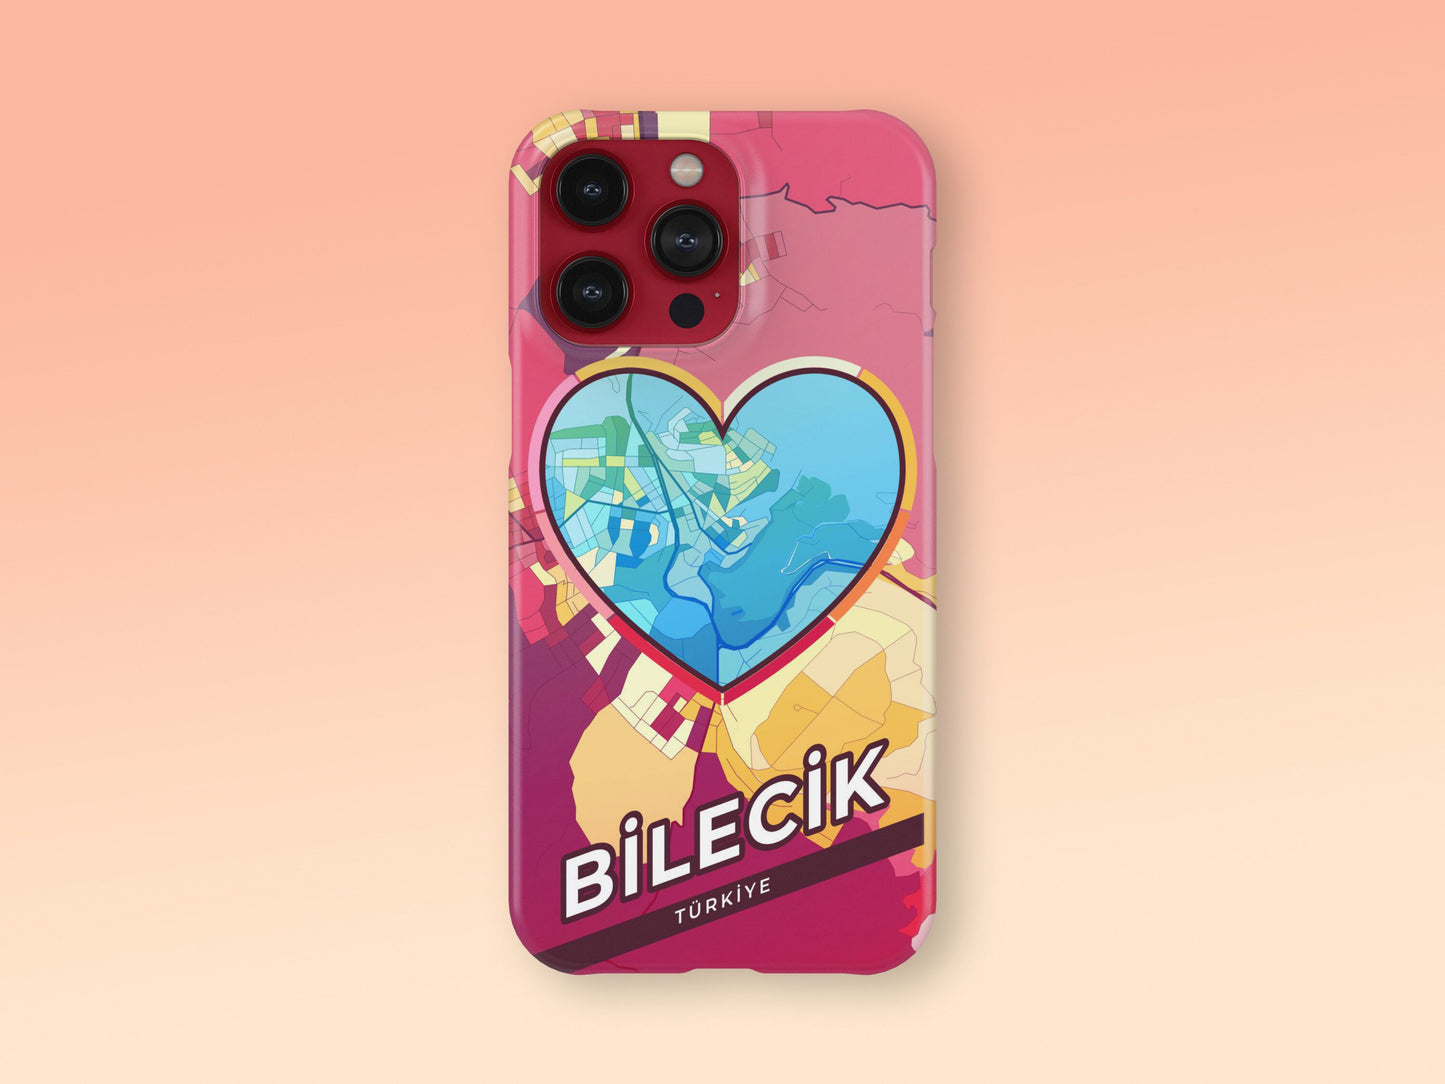 Bilecik Turkey slim phone case with colorful icon. Birthday, wedding or housewarming gift. Couple match cases. 2